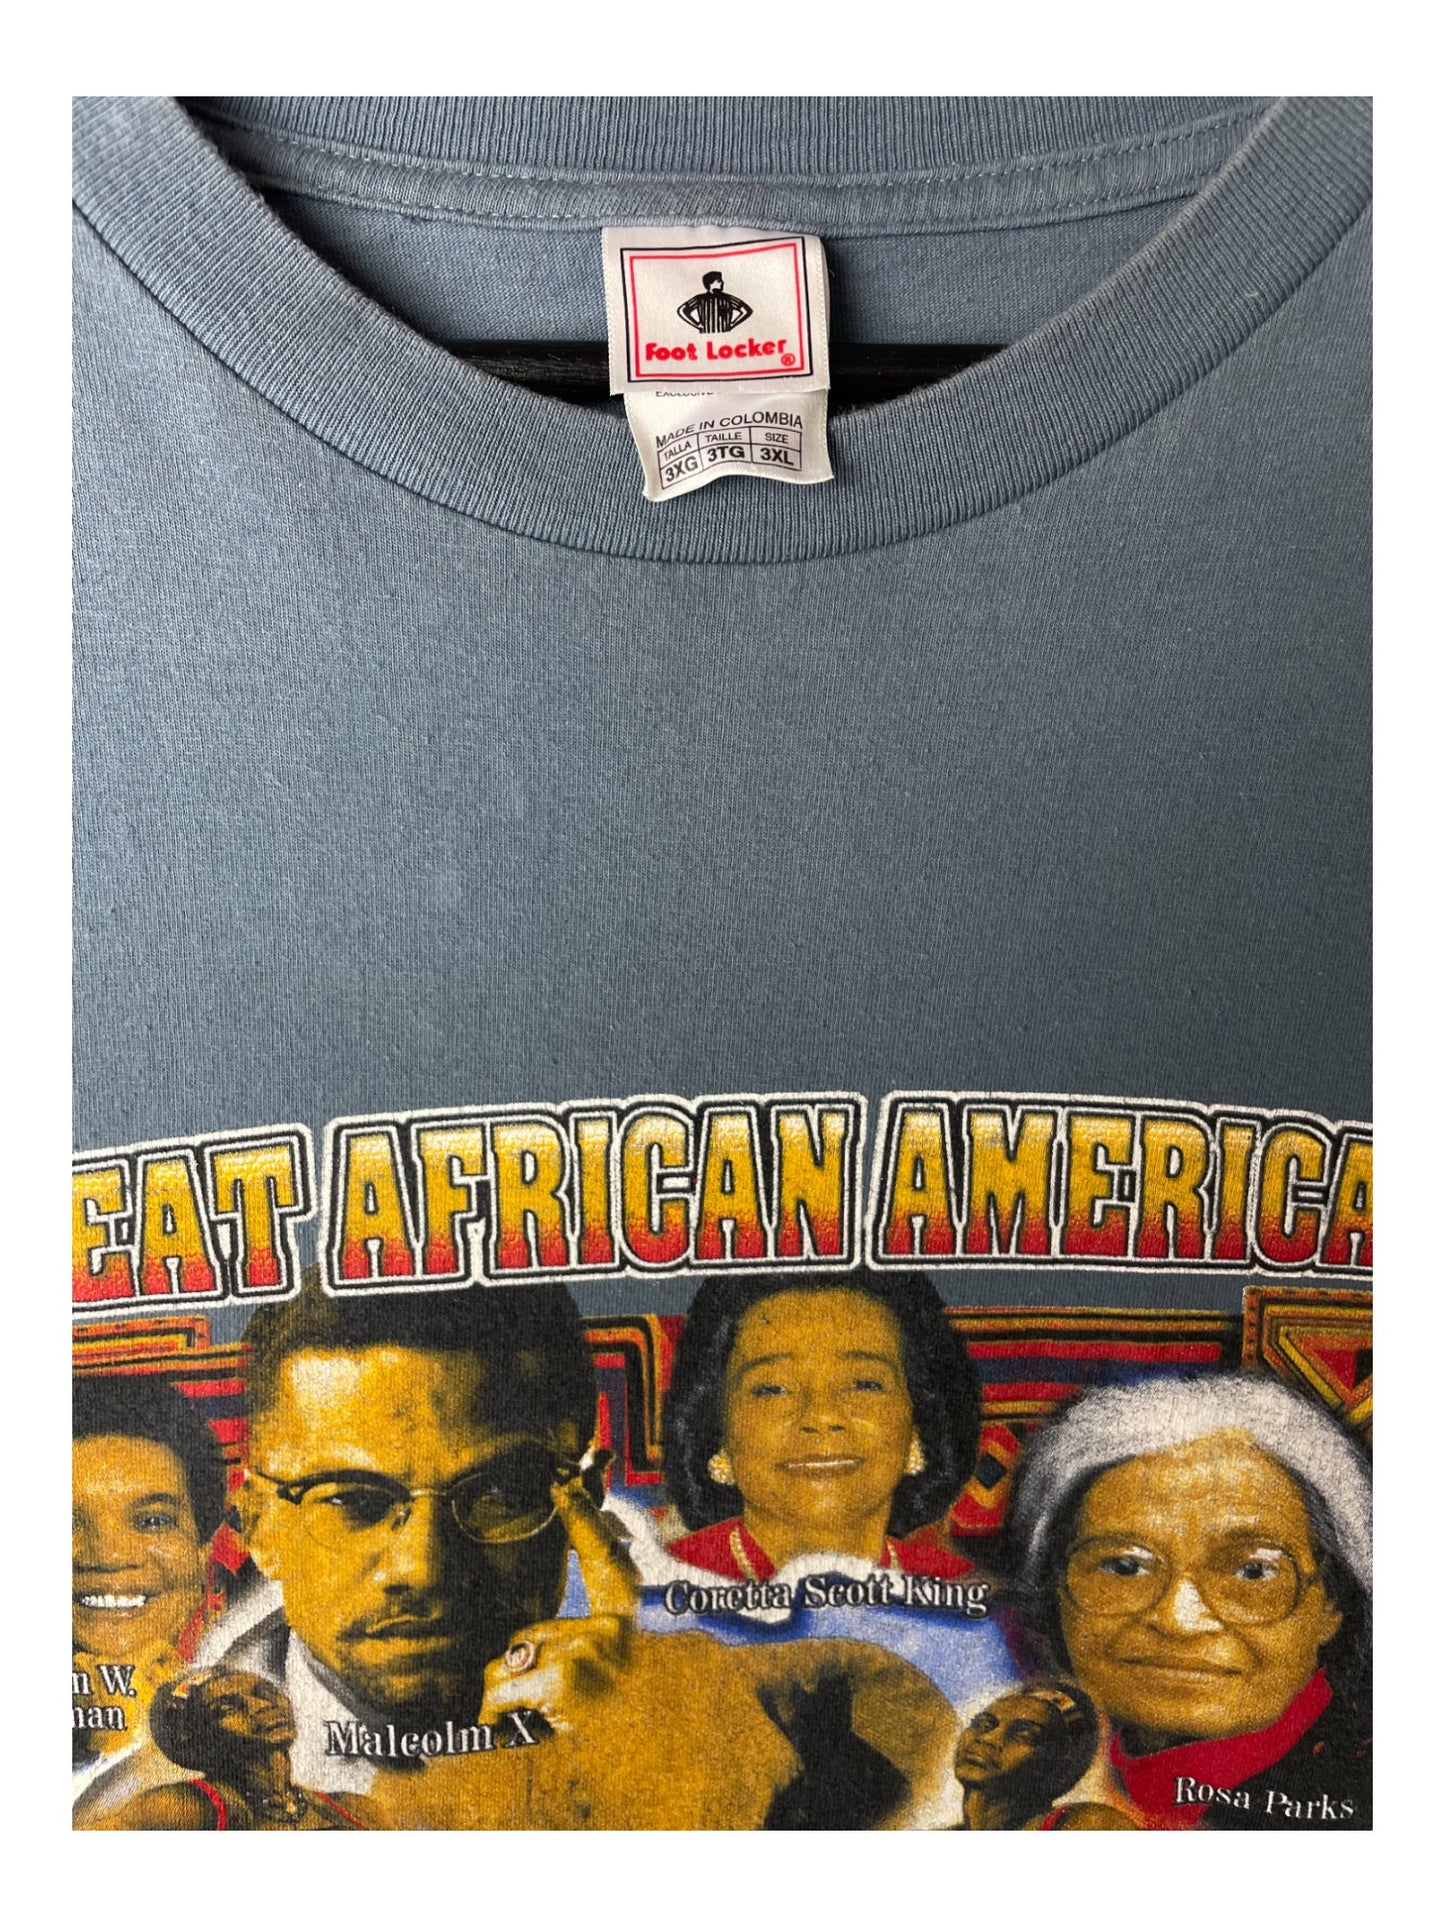 Black History Bootleg Rap T-Shirt